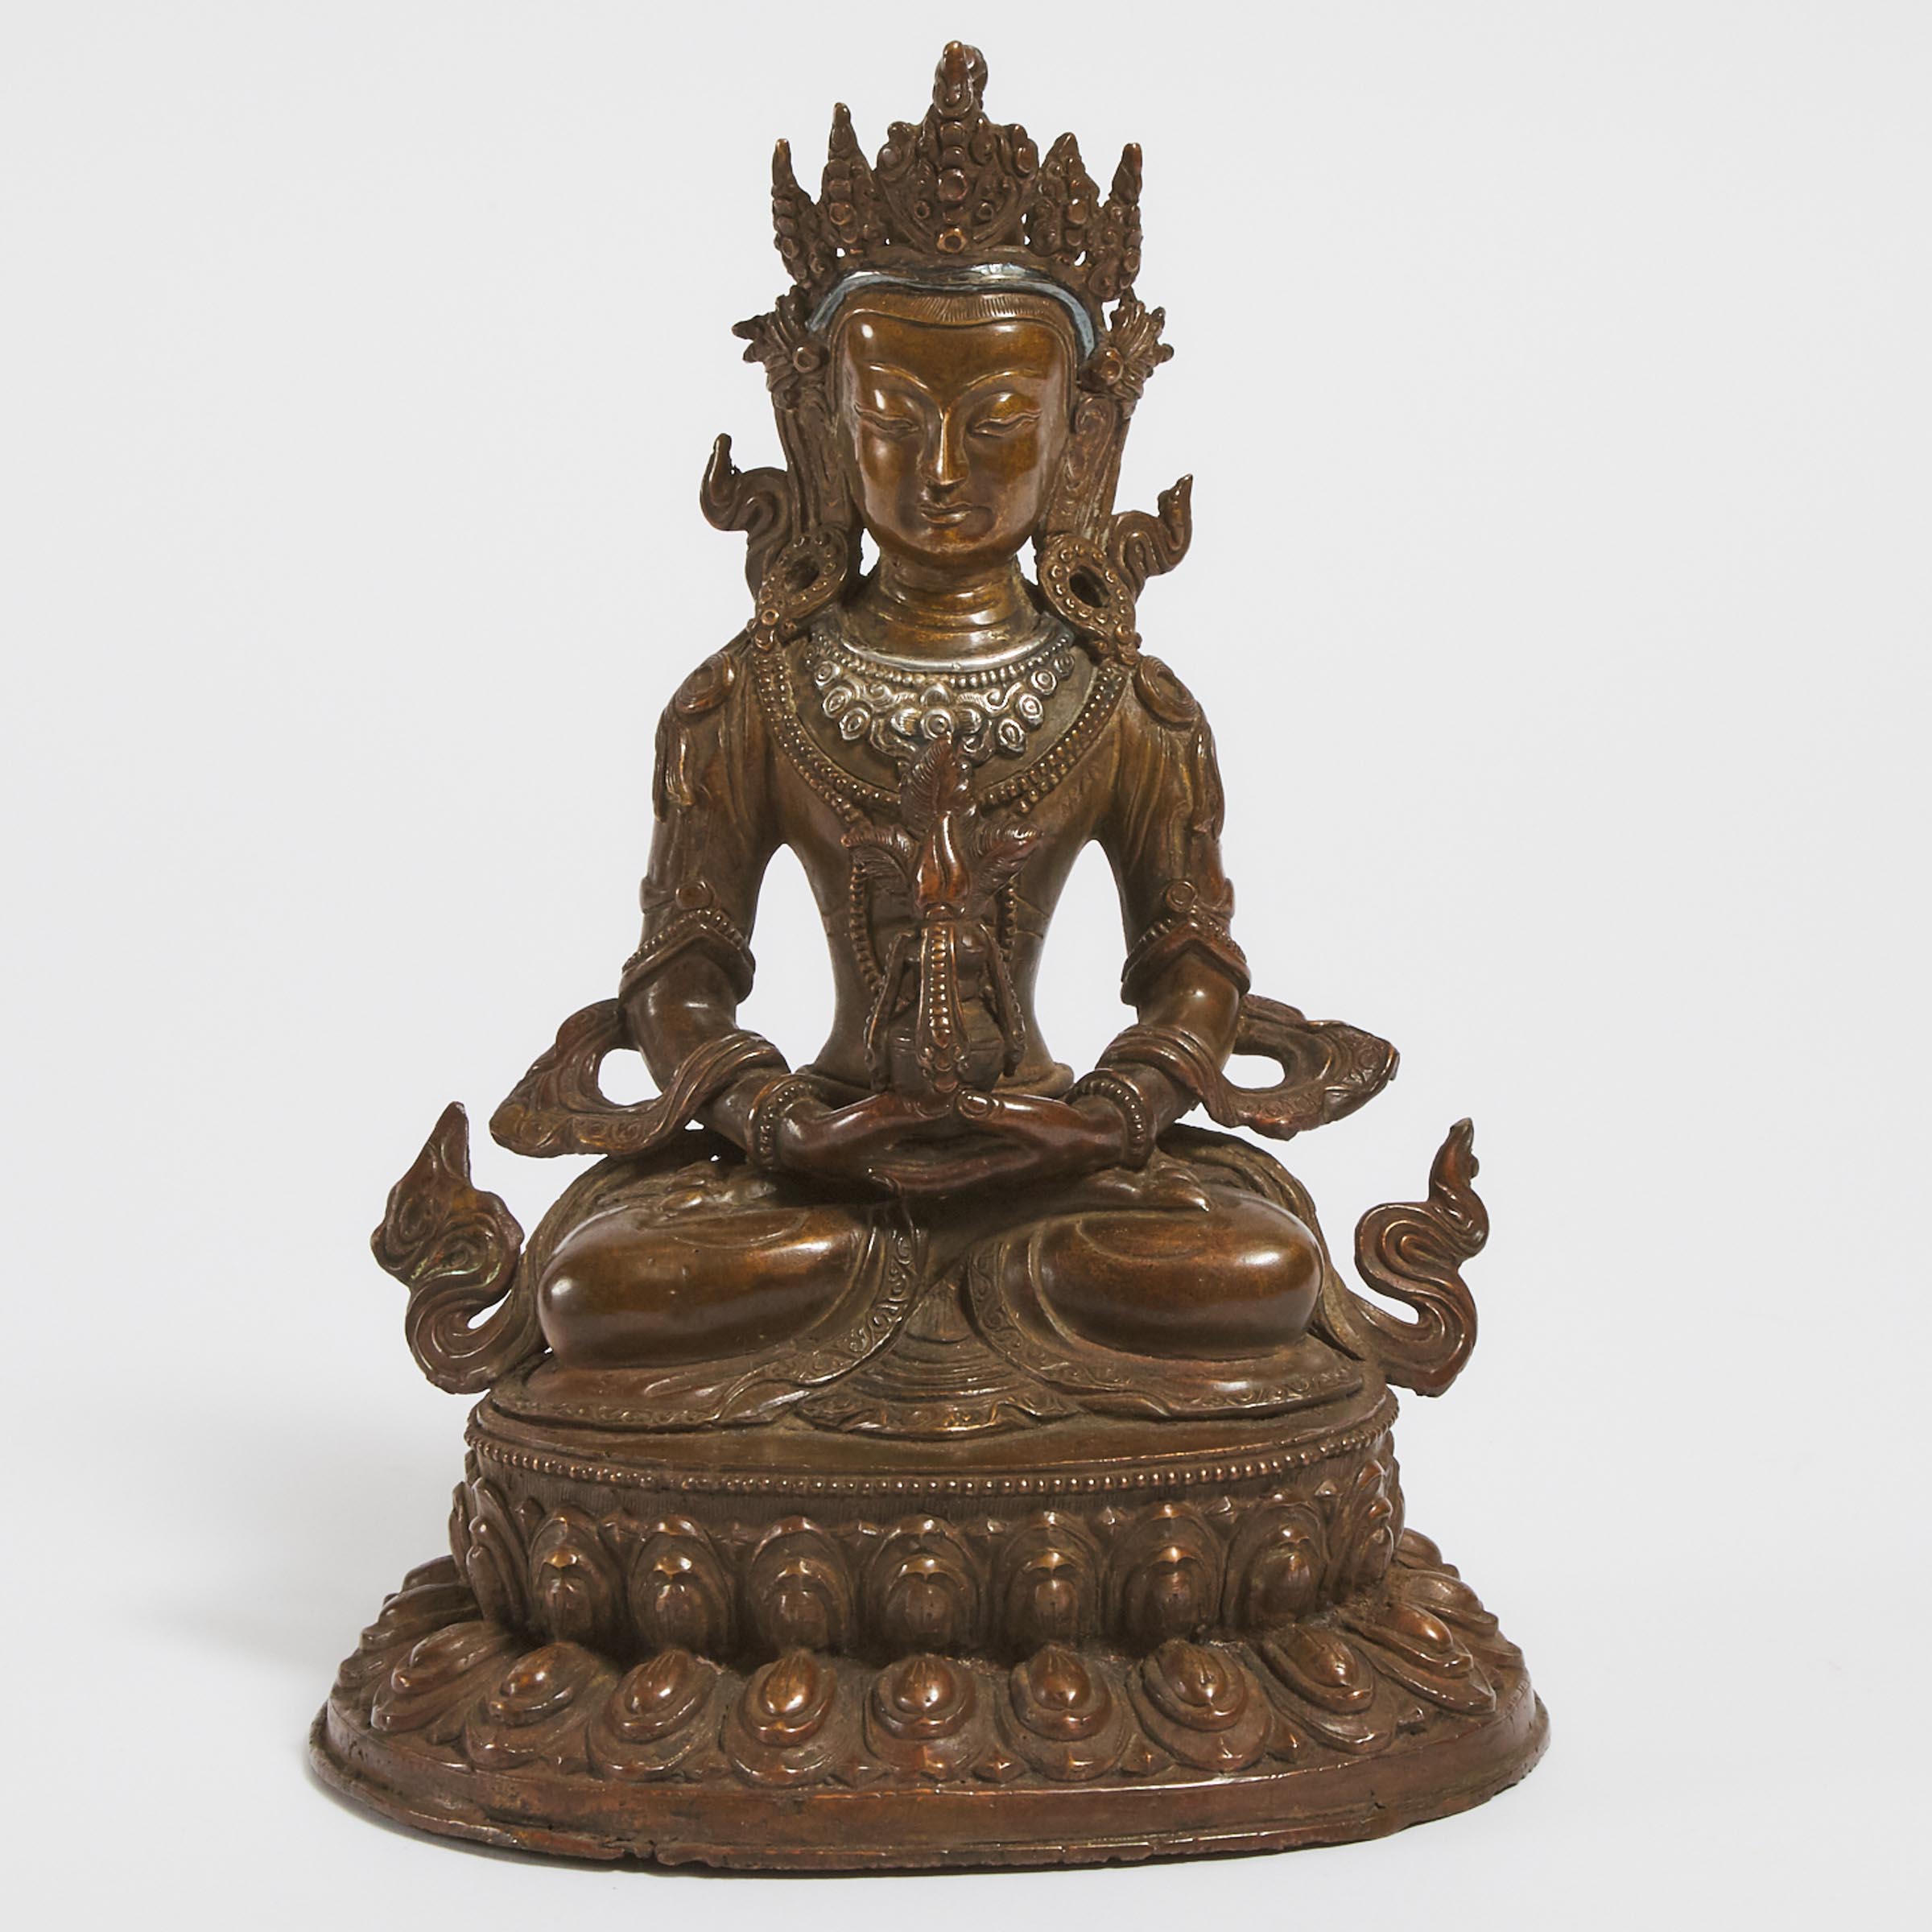 A Silver-Inlaid Bronze Figure of Amitabha Buddha, Tibet/Nepal